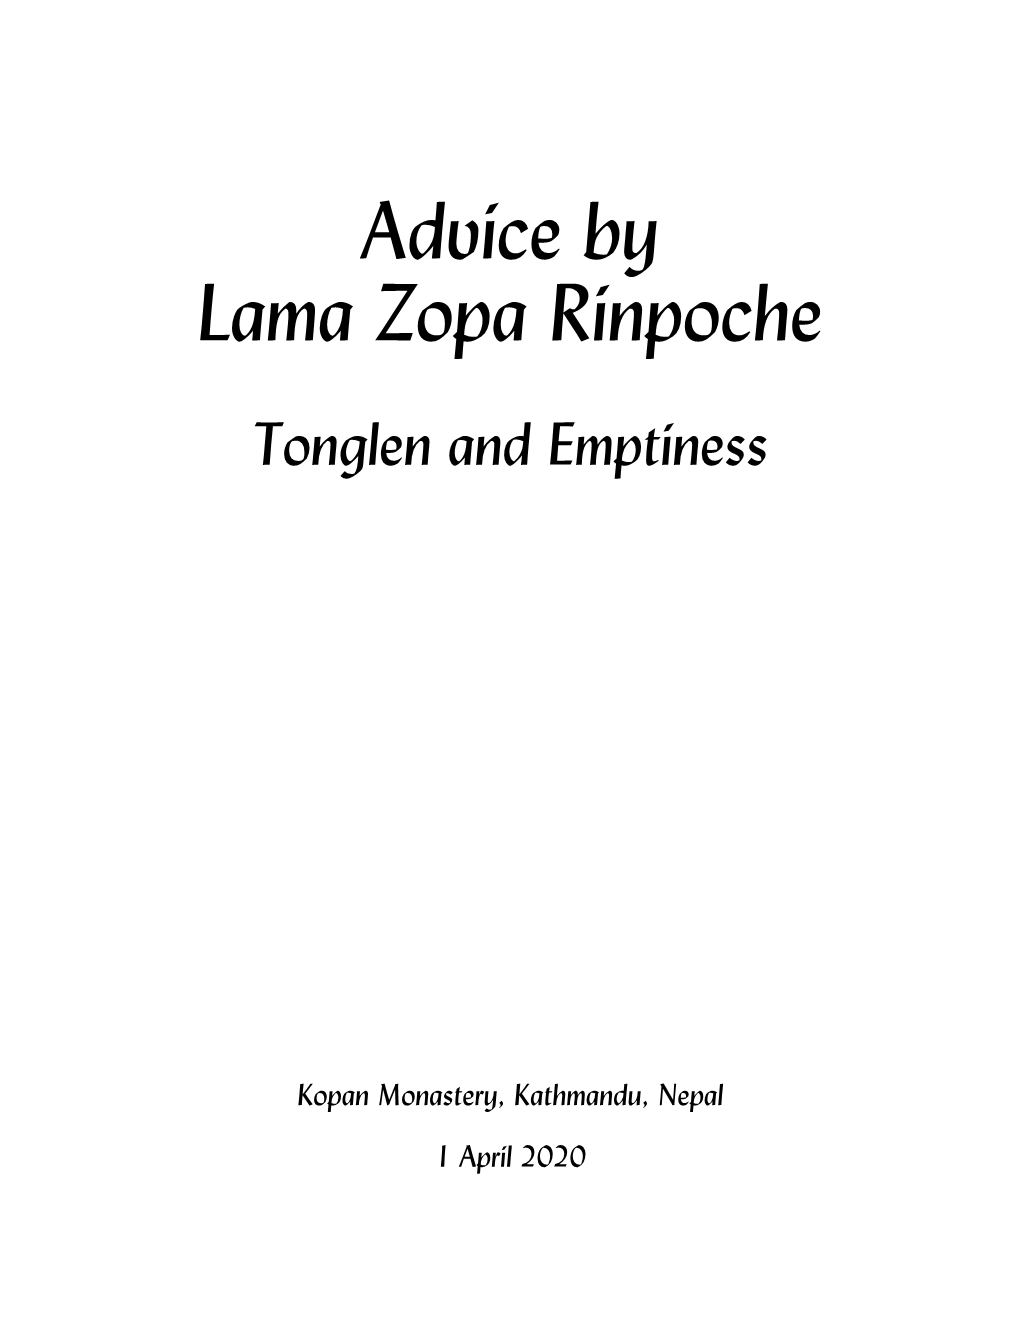 Advice by Lama Zopa Rinpoche